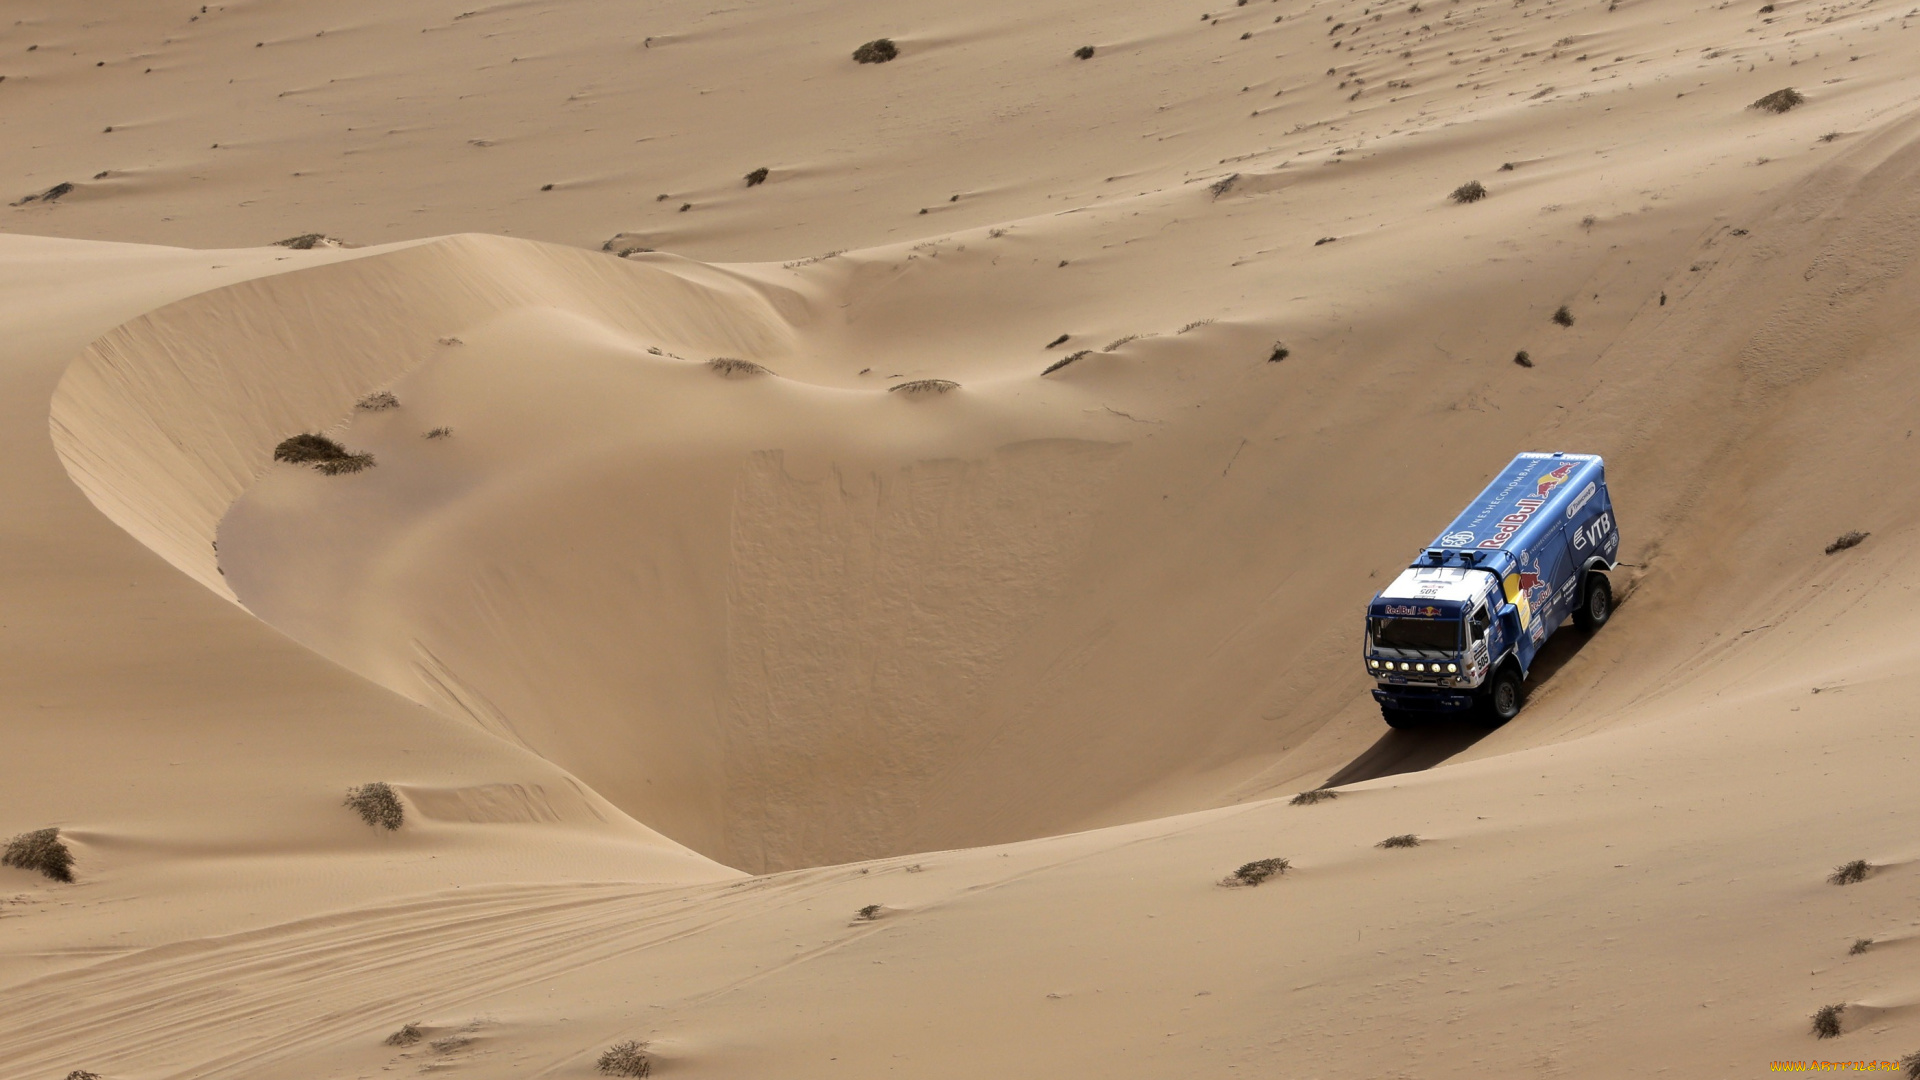 спорт, авторалли, дюны, пустыня, песок, dakar, rally, камаз, грузовик